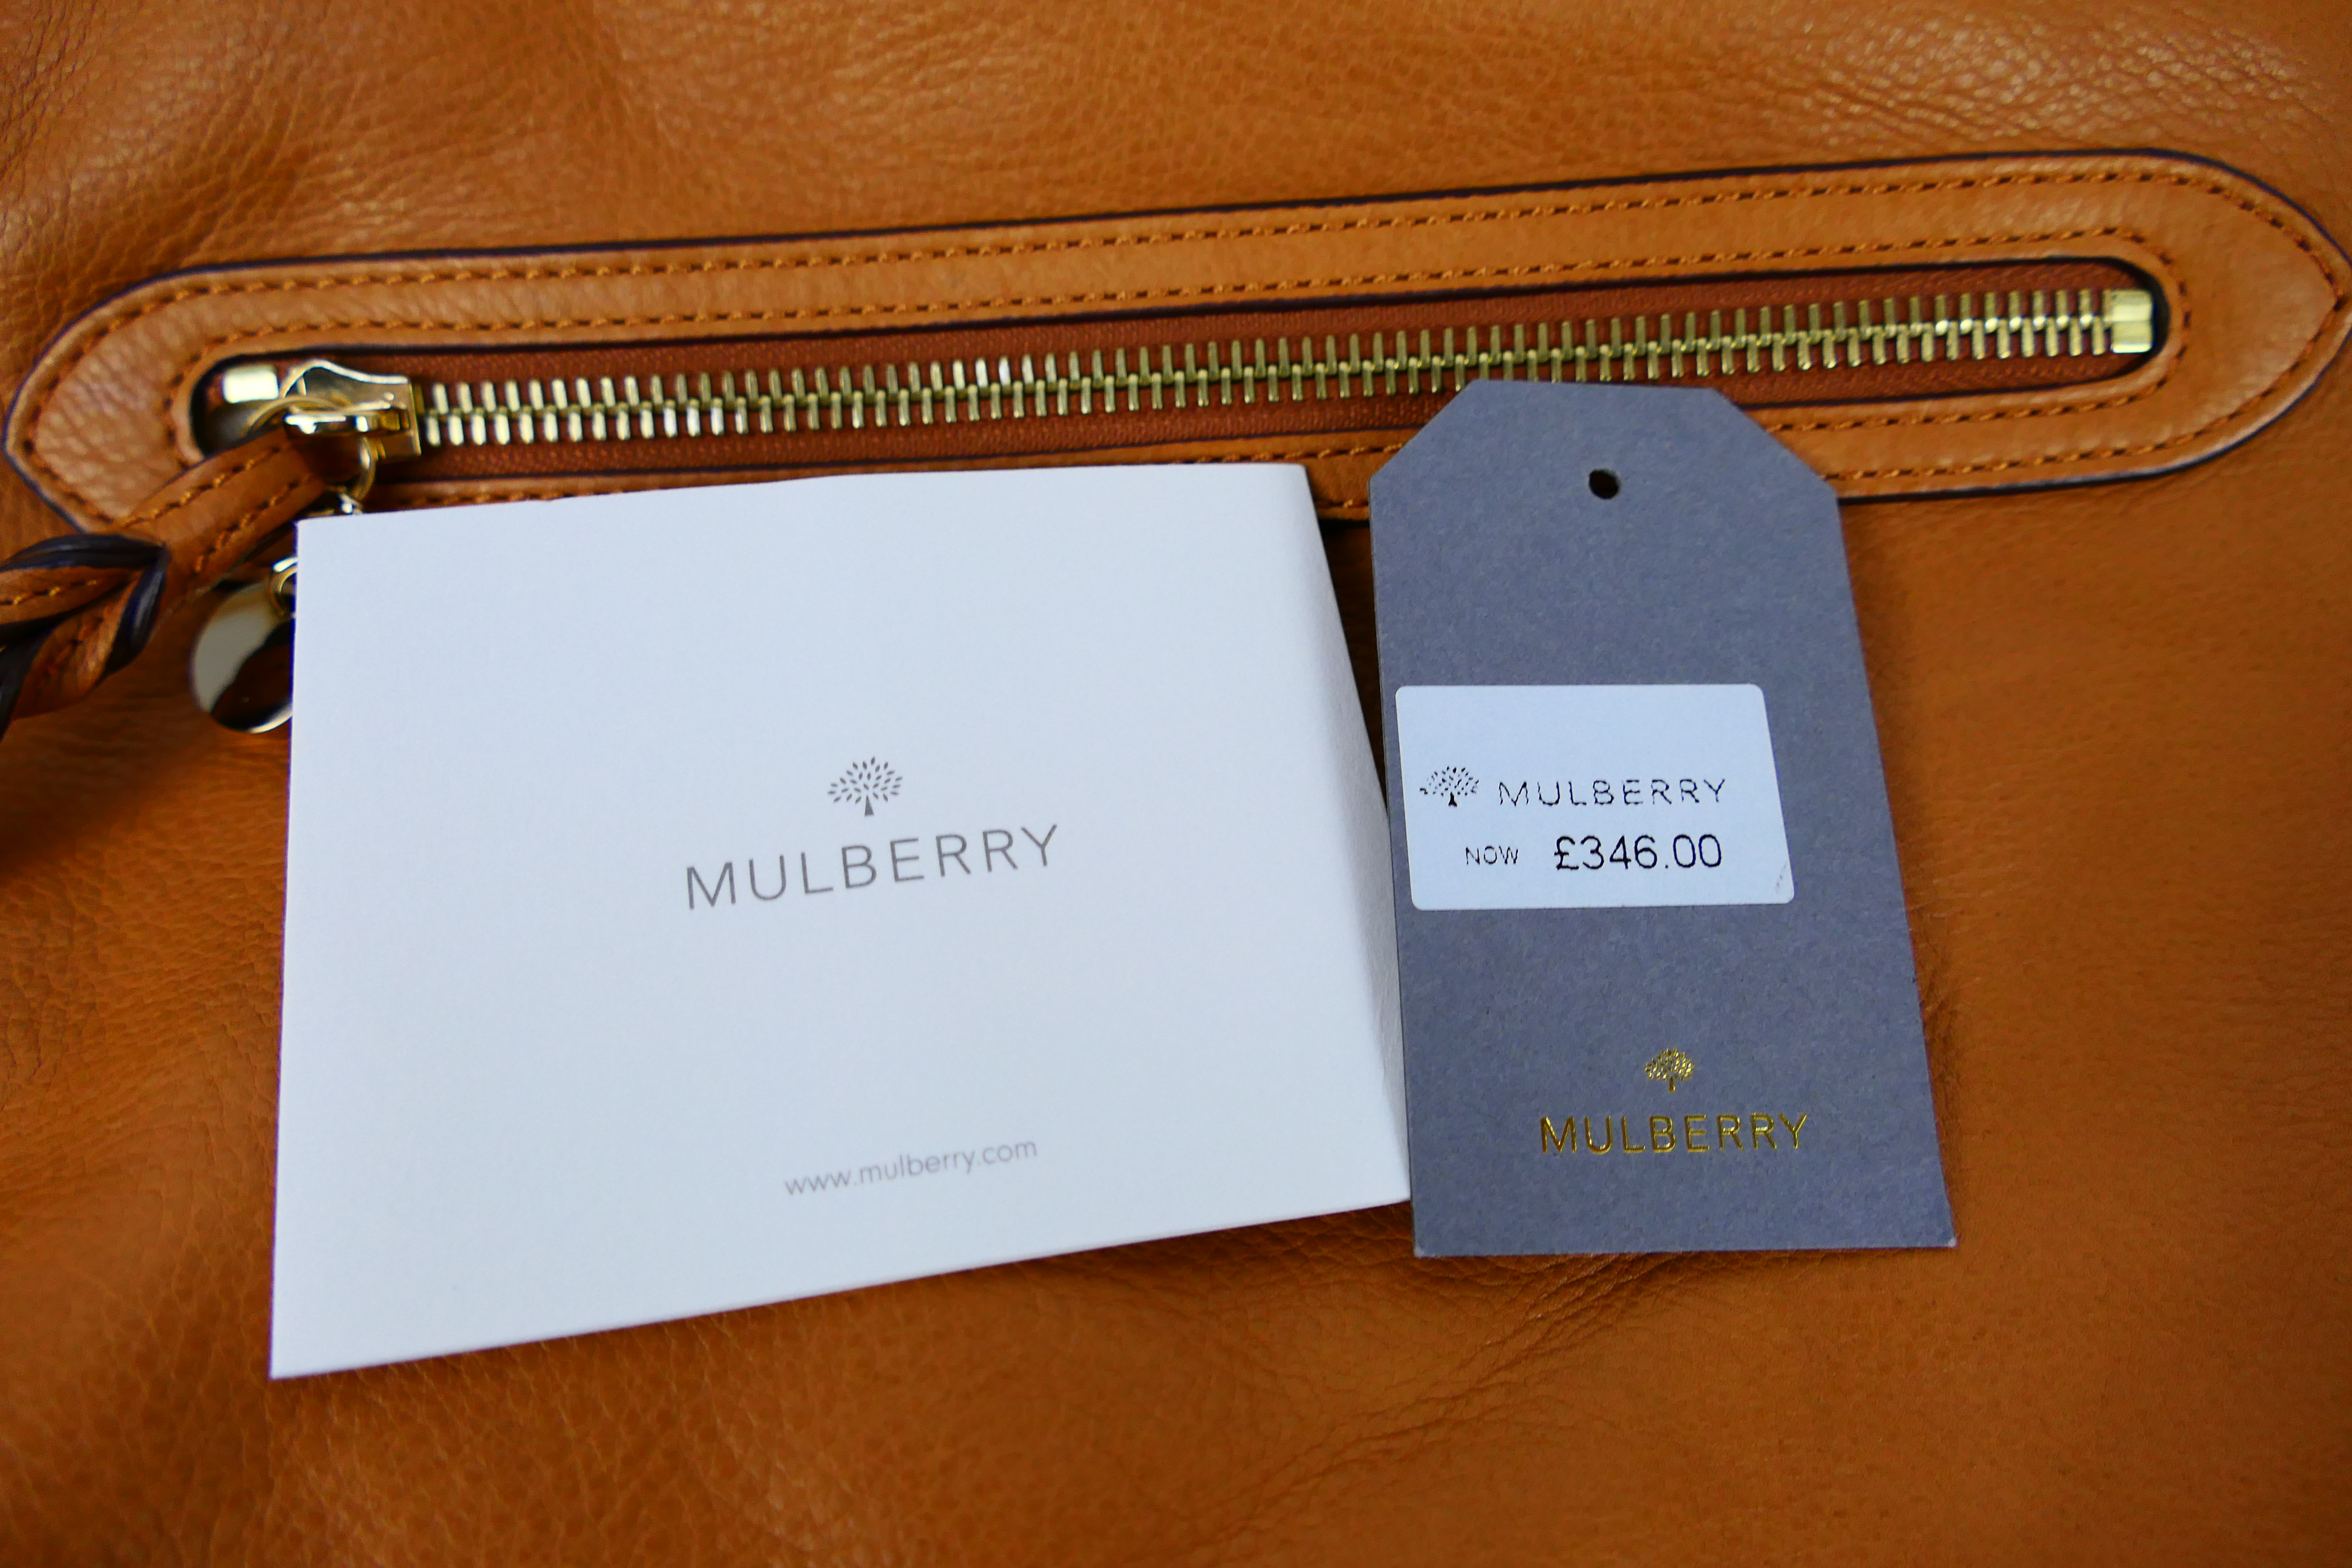 Mulberry - A chestnut Mulberry leather shoulder bag - Shoulder bag has one interior zip pocket and - Image 8 of 8